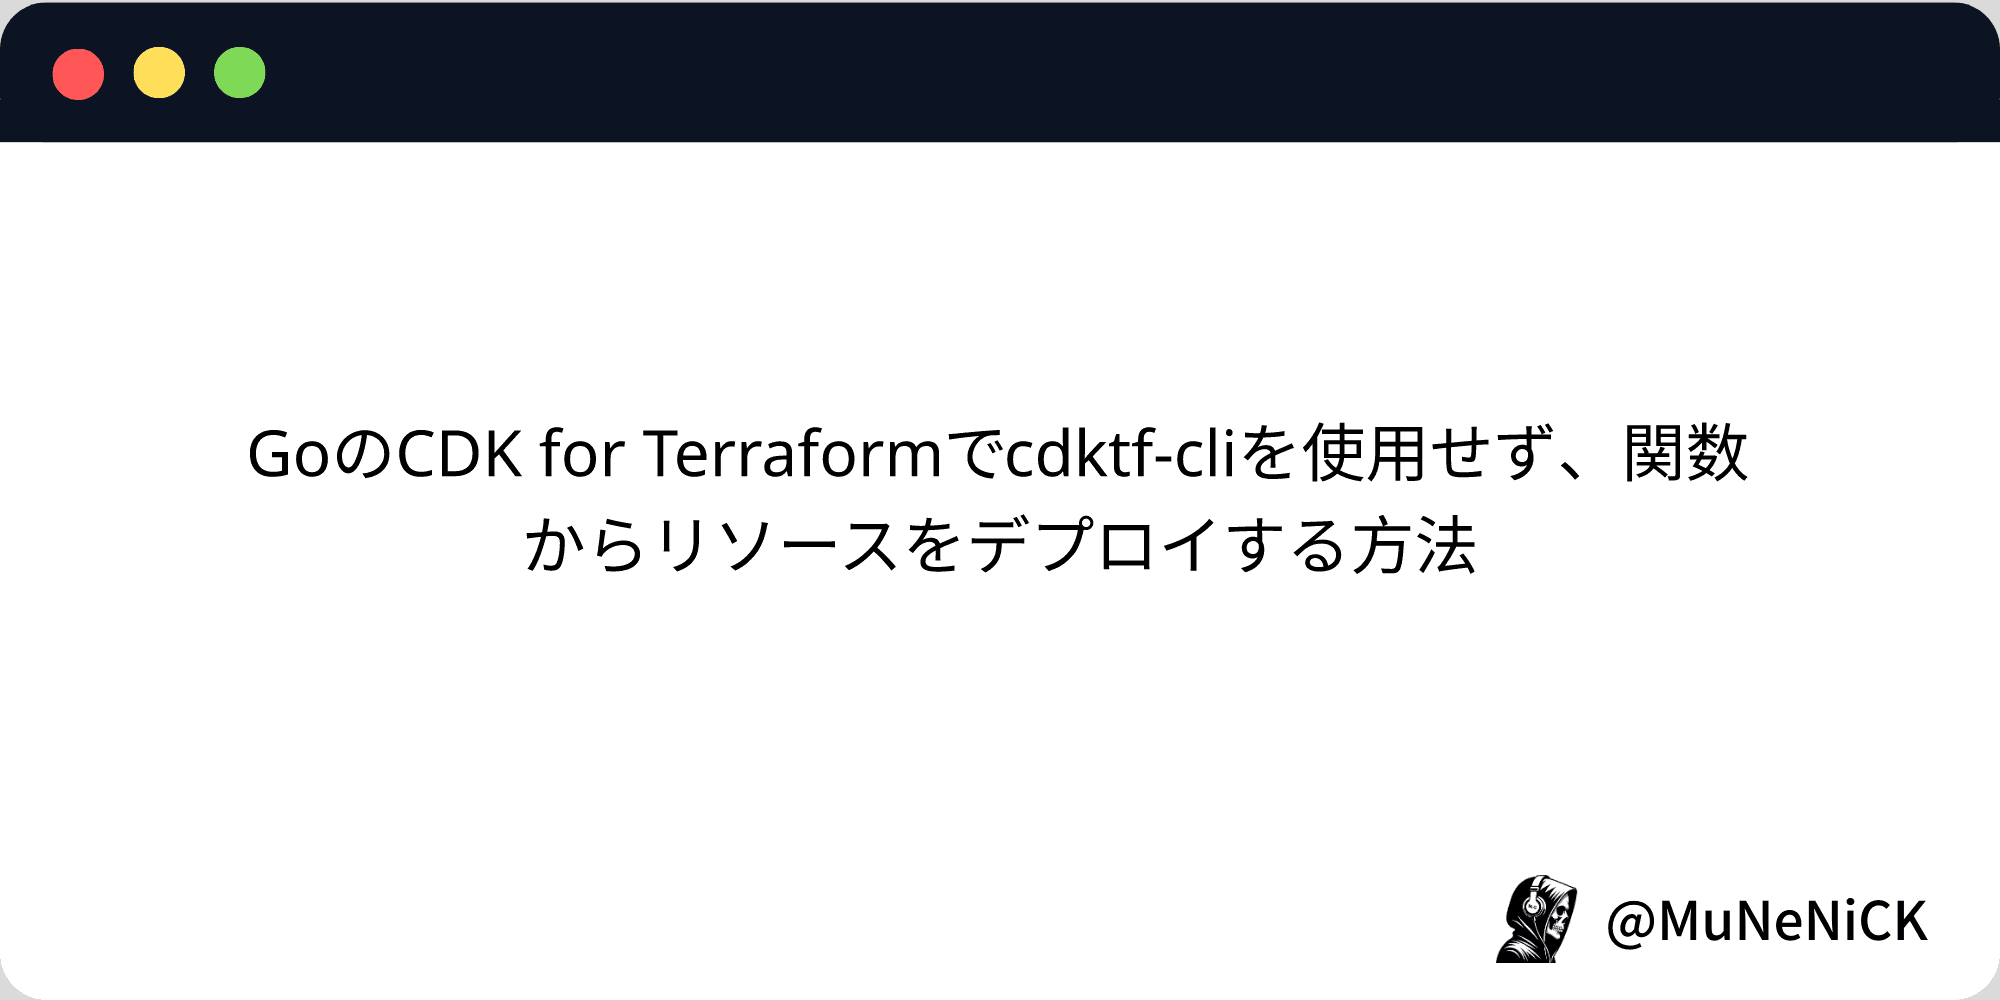 Cover Image for GoのCDK for Terraformでcdktf-cliを使用せず、関数からリソースをデプロイする方法